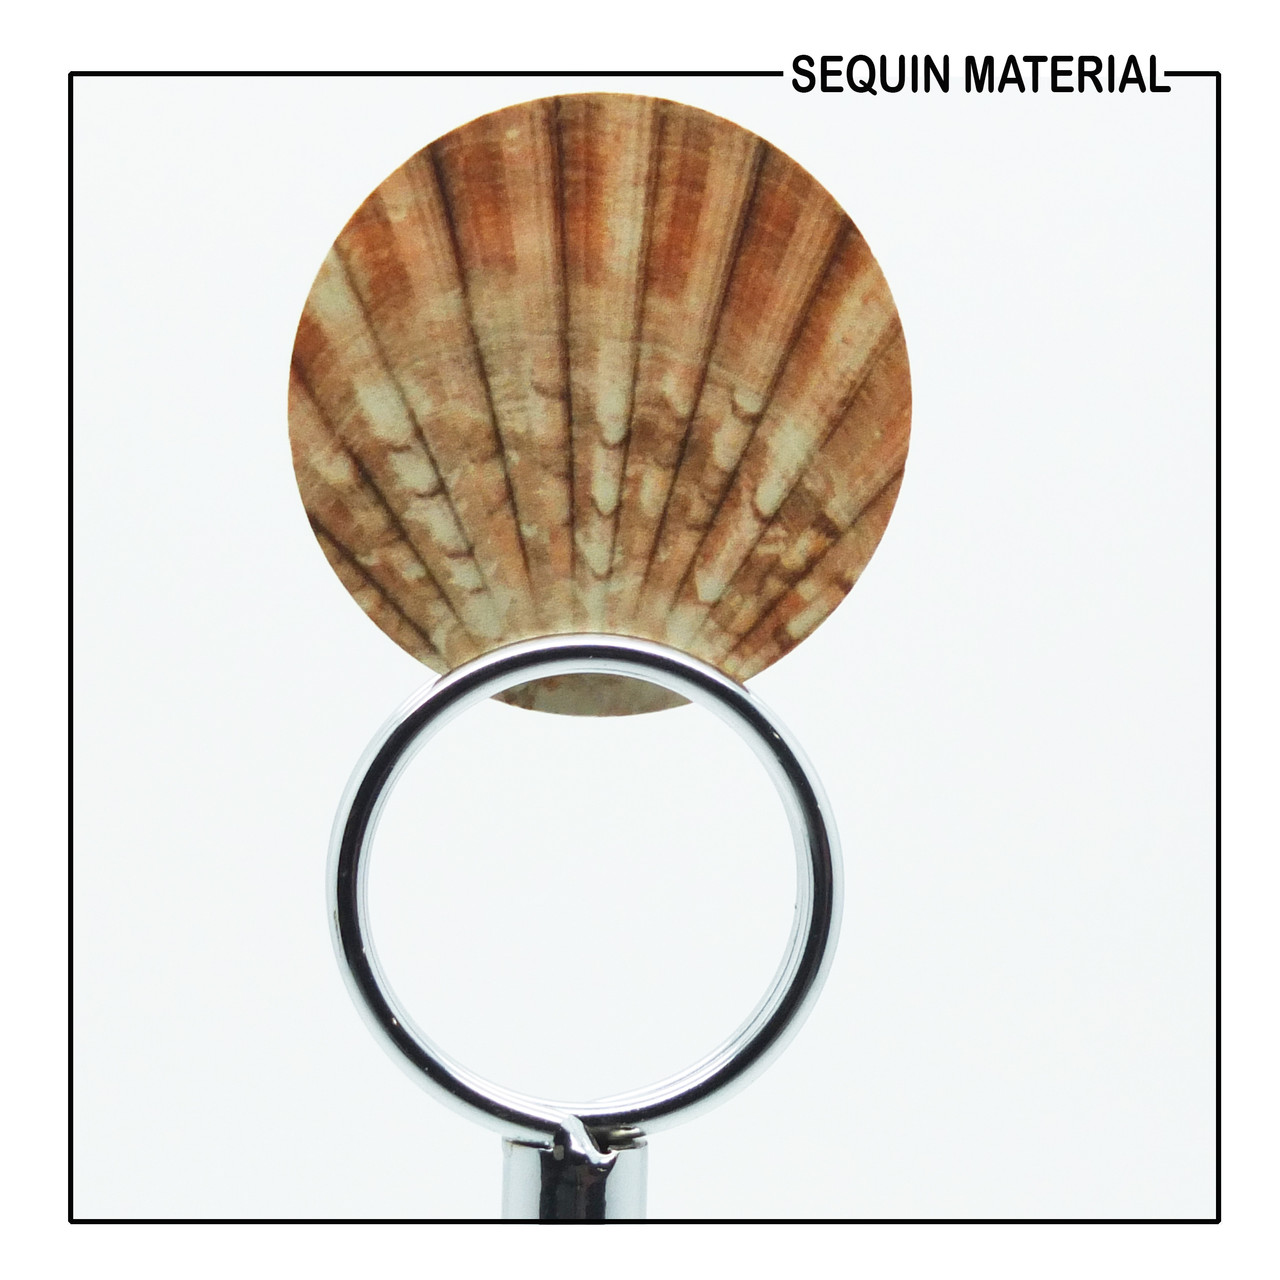 SequinsUSA Scallop Shell Ocean Sealife  Opaque Print Sequin Material RL209